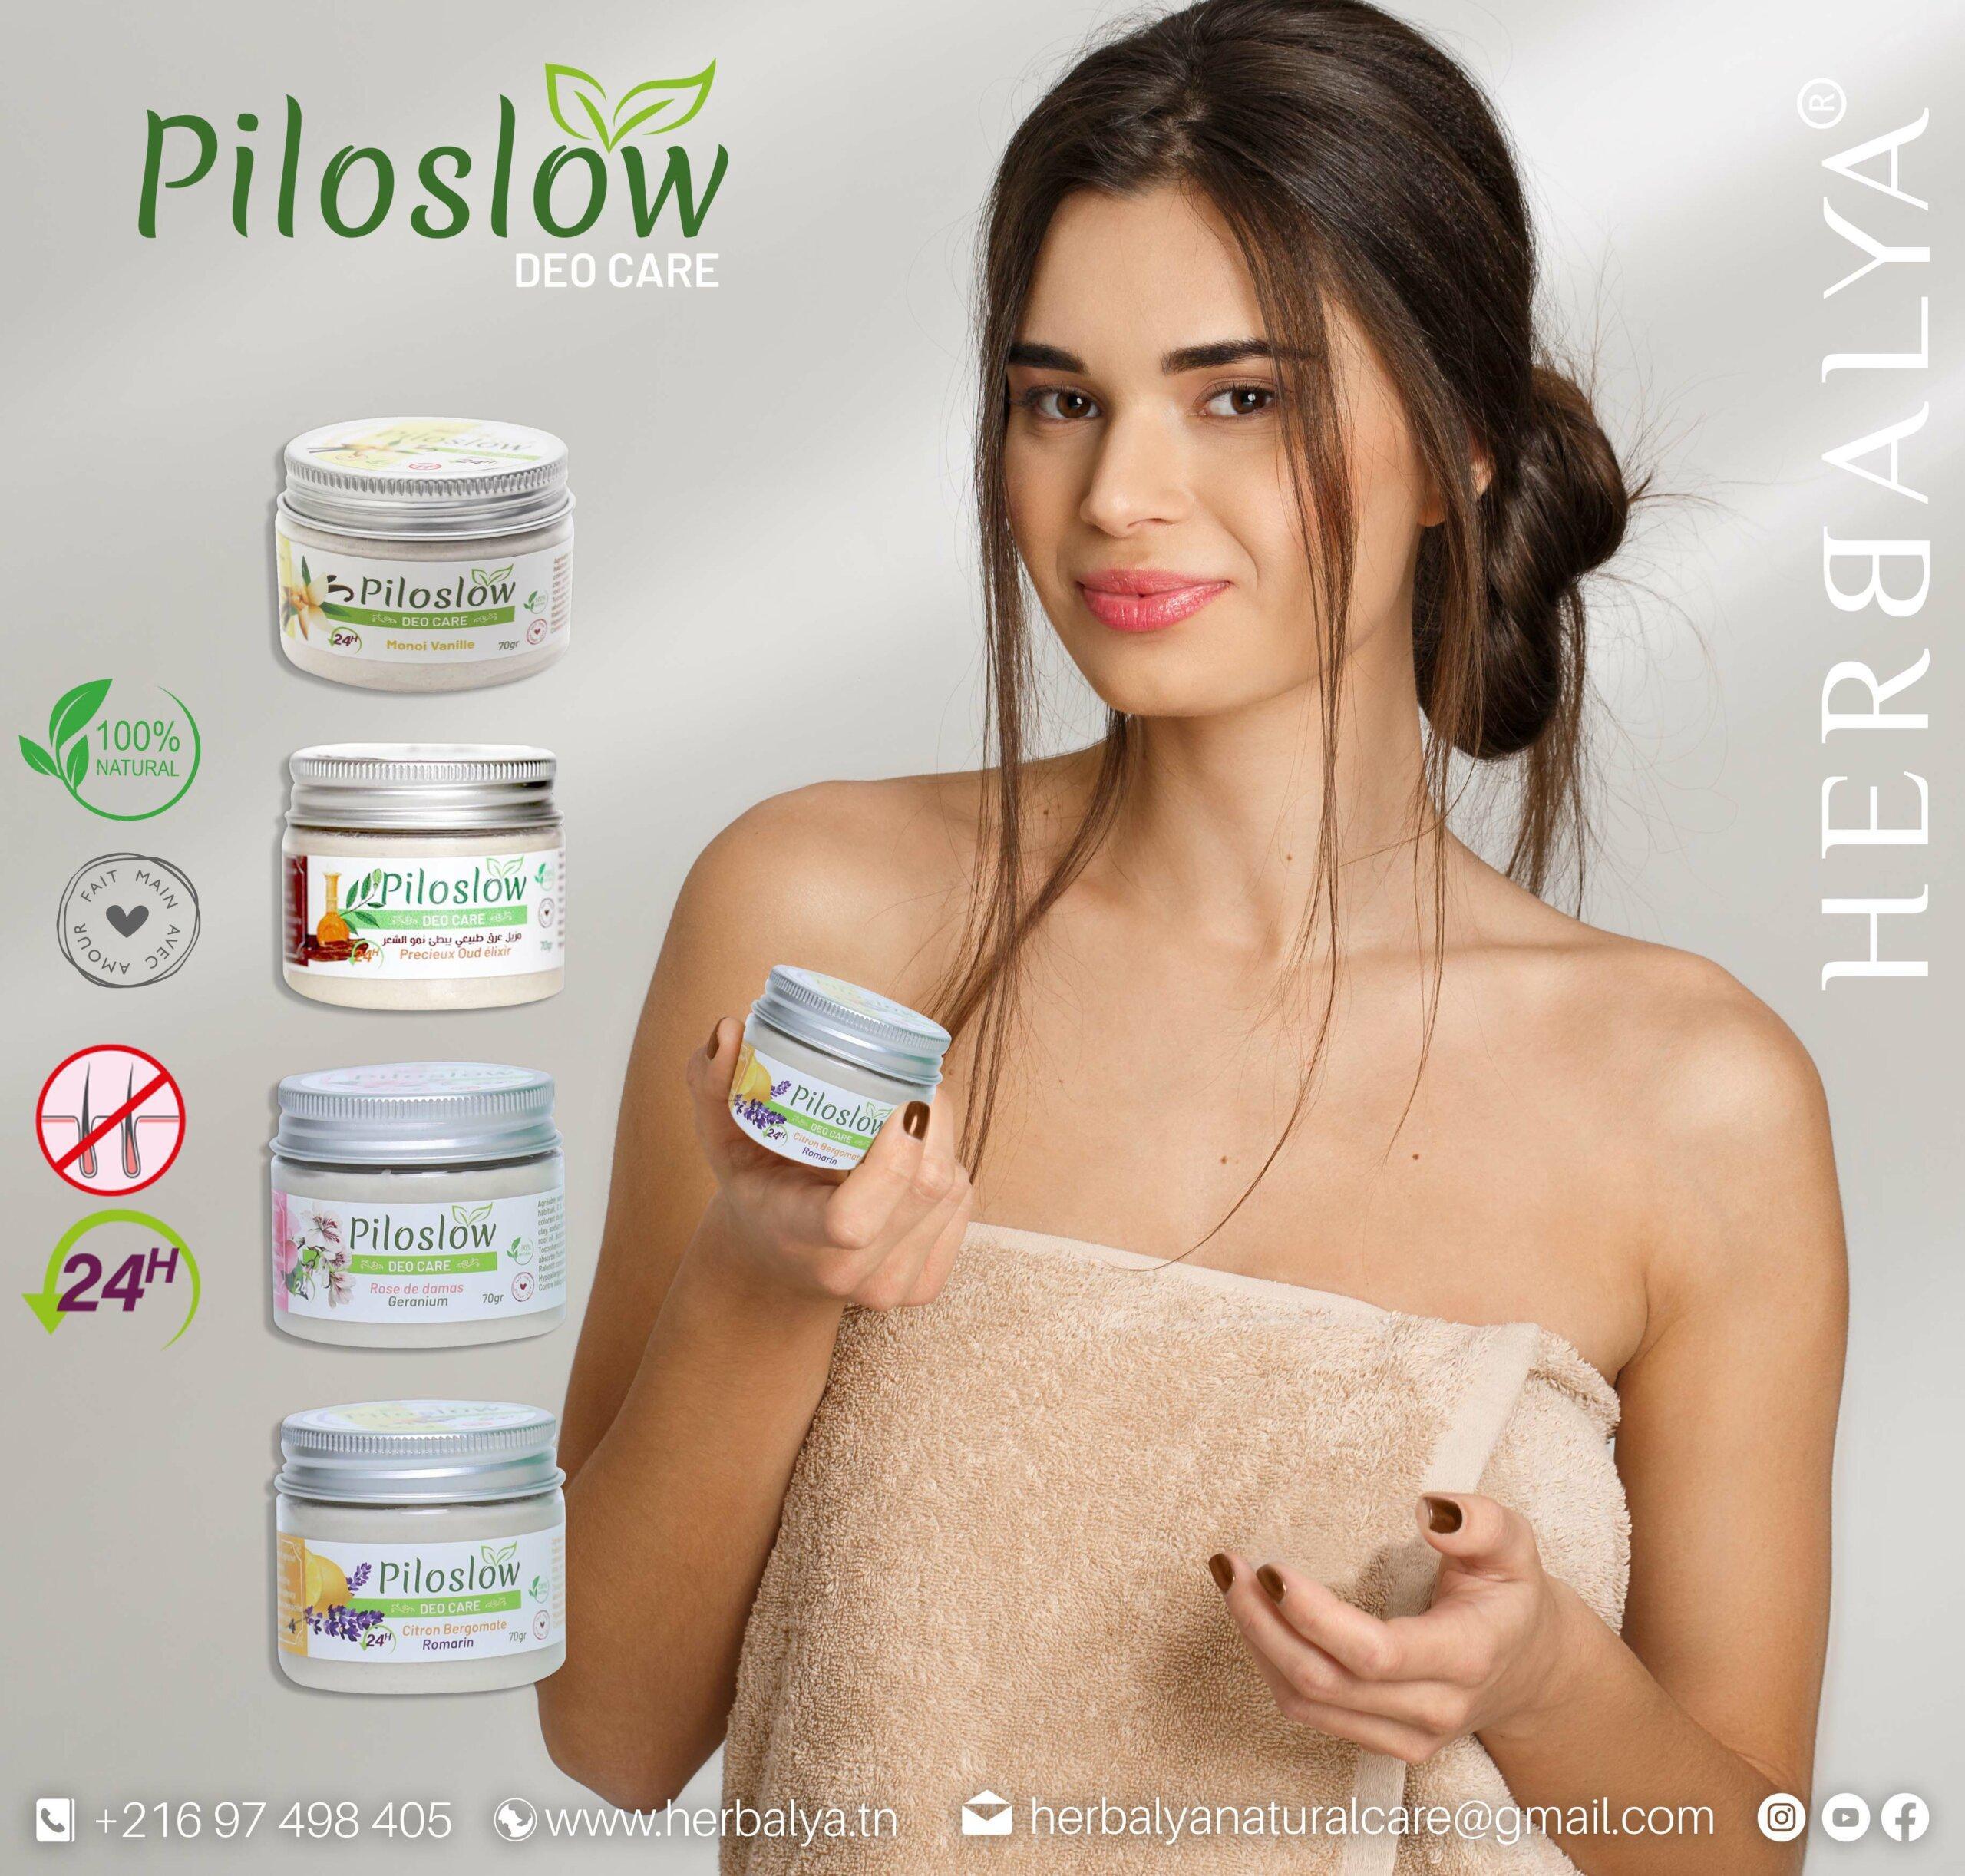 piloslow deodorant naturel qui ralentit la repousse des poils